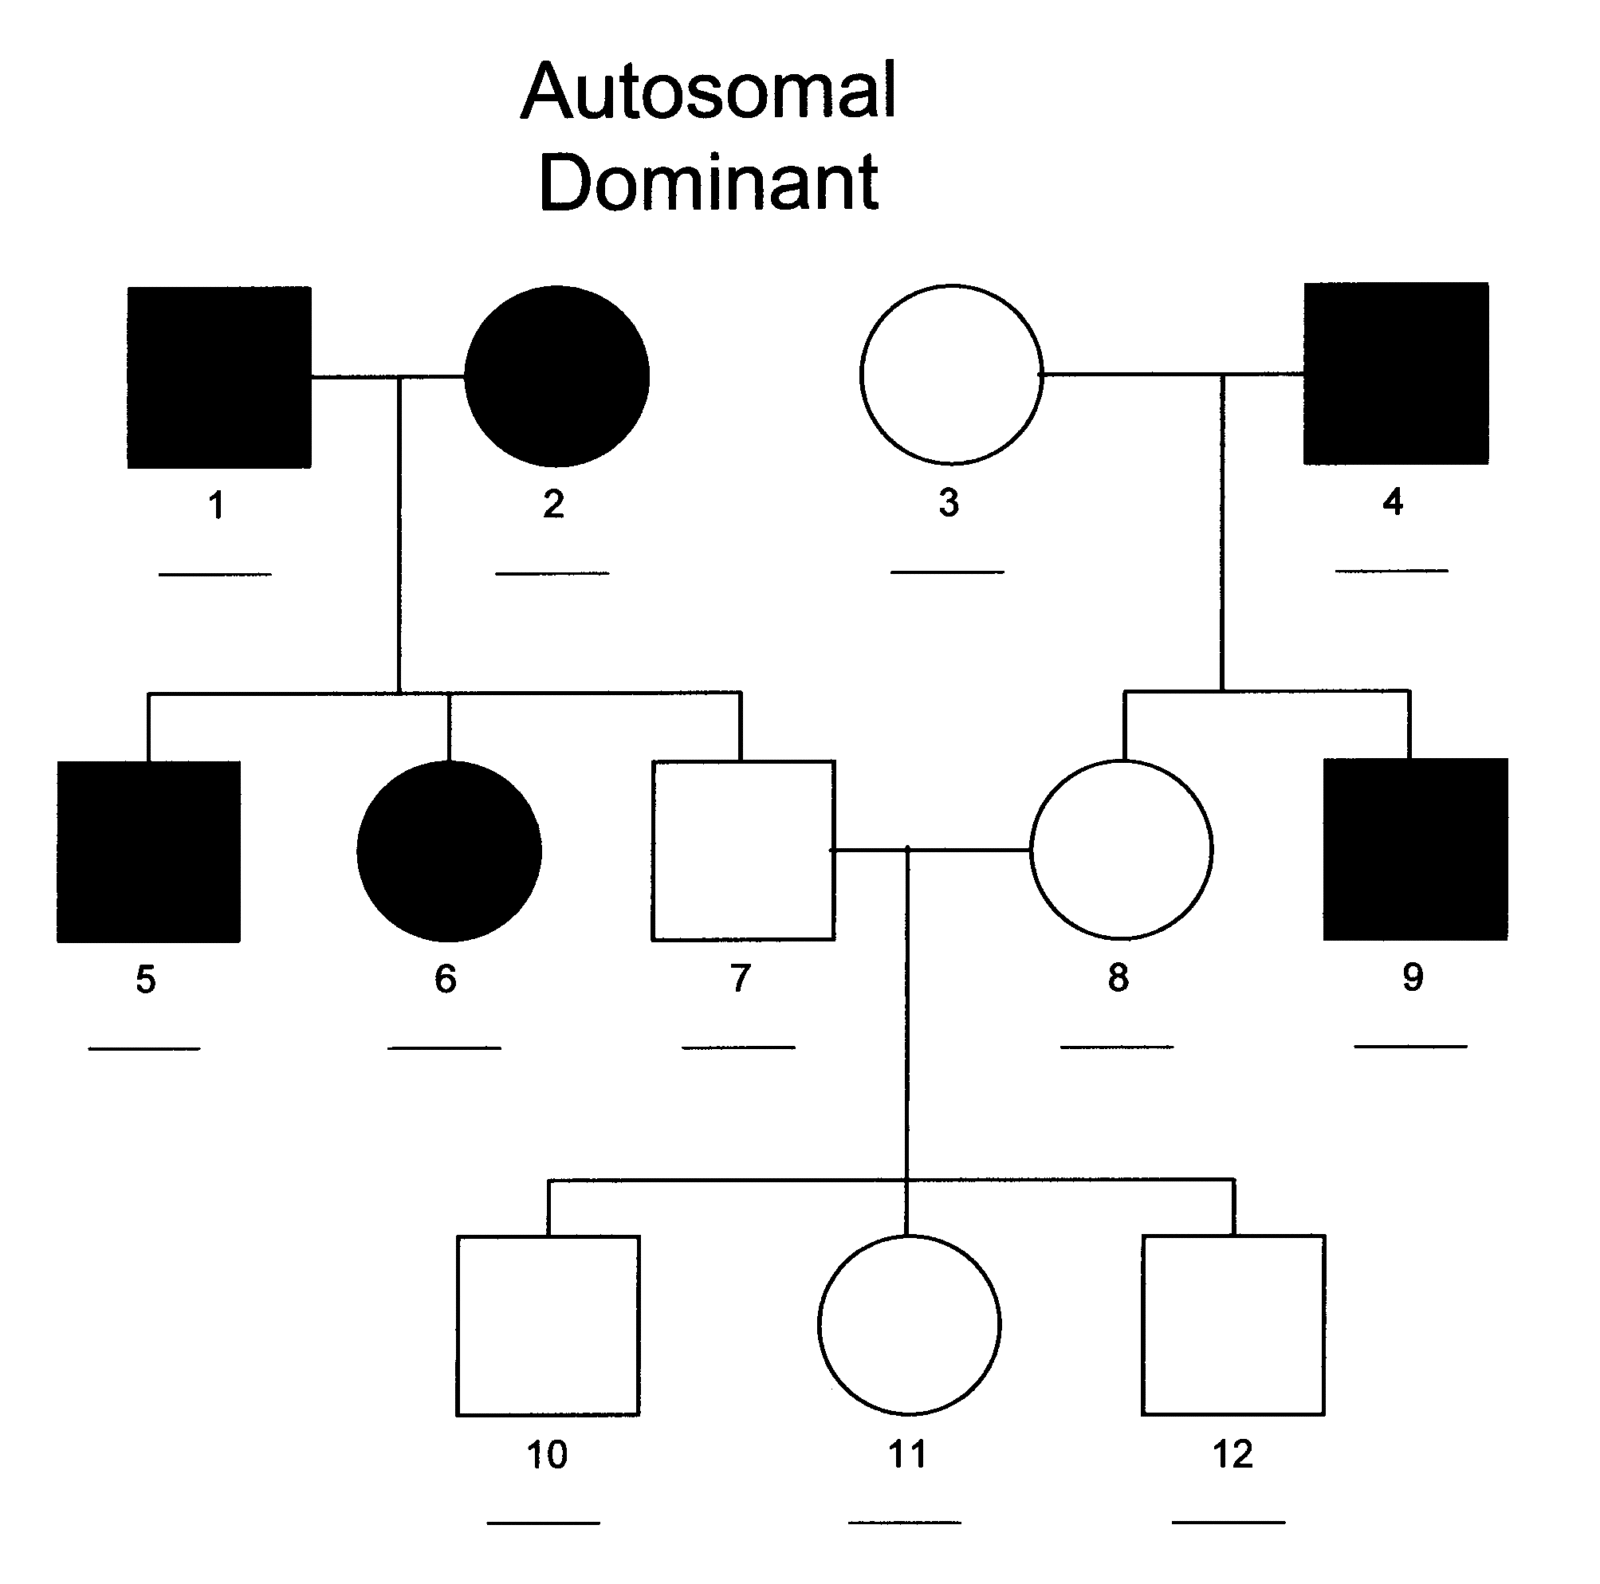 autosomal-dominant-inheritance-michigan-genetics-resource-center